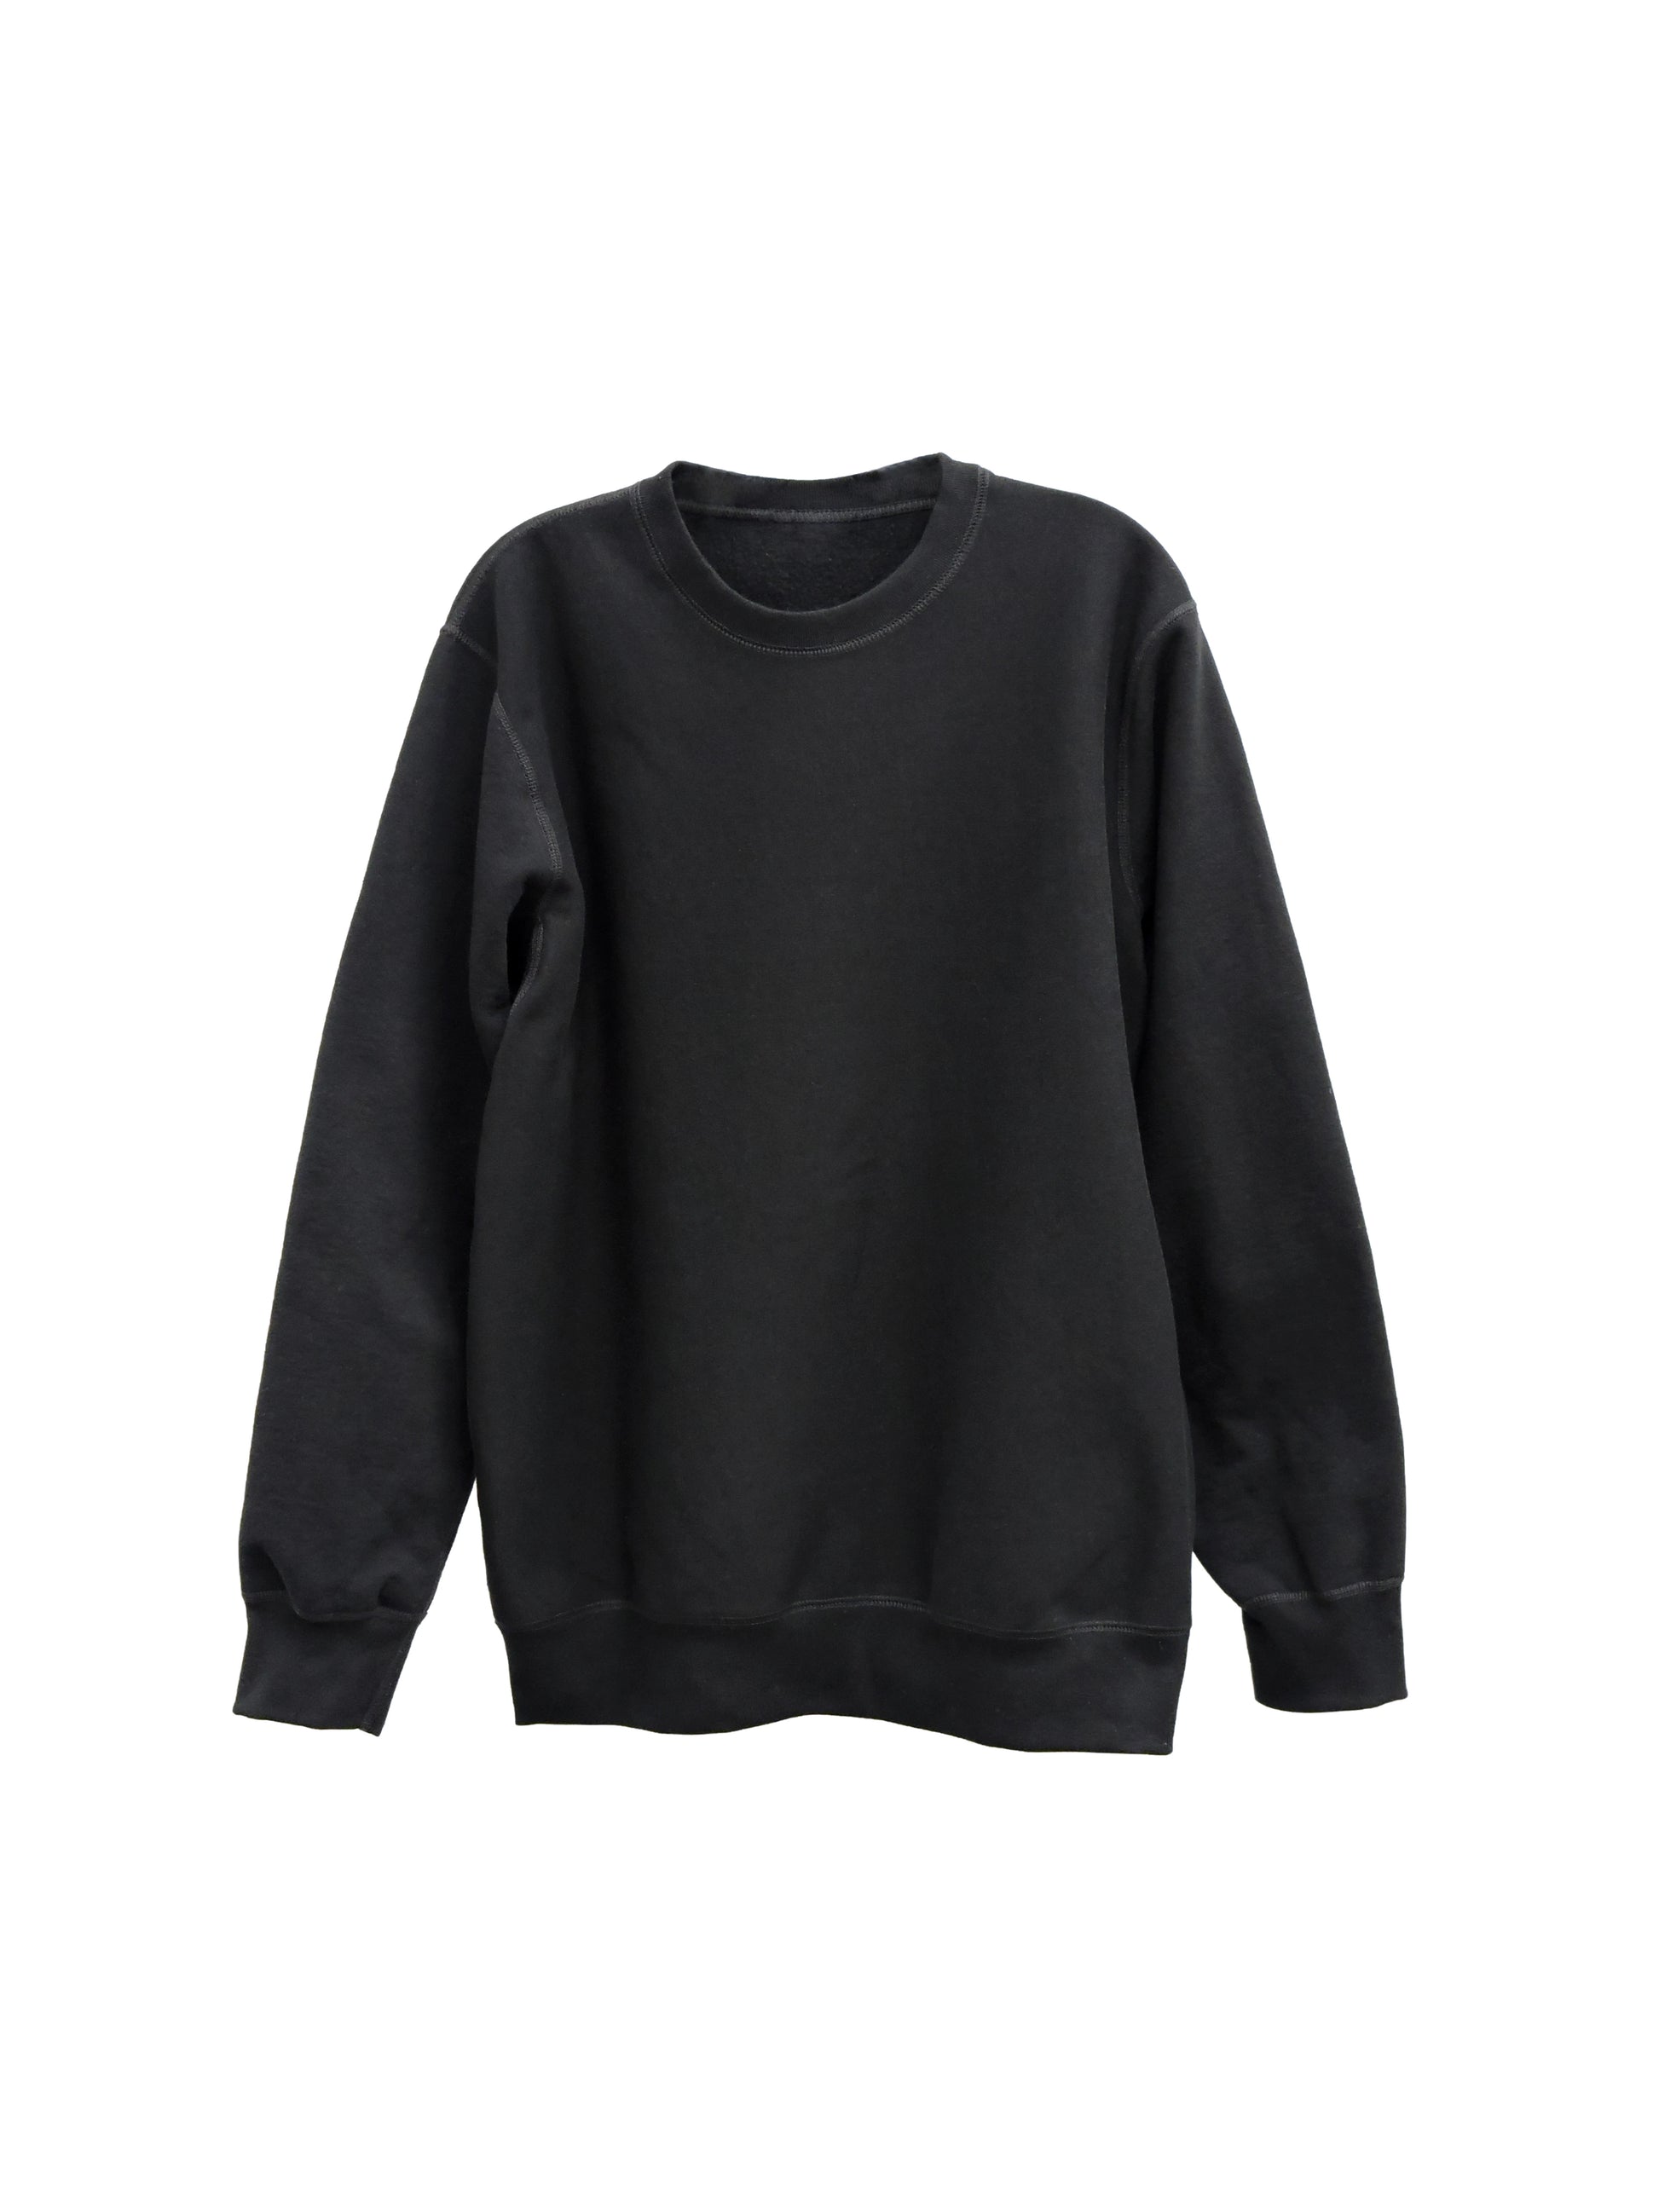 Essential Black Crewneck Sweater | 450 GSM Organic Cotton | Made